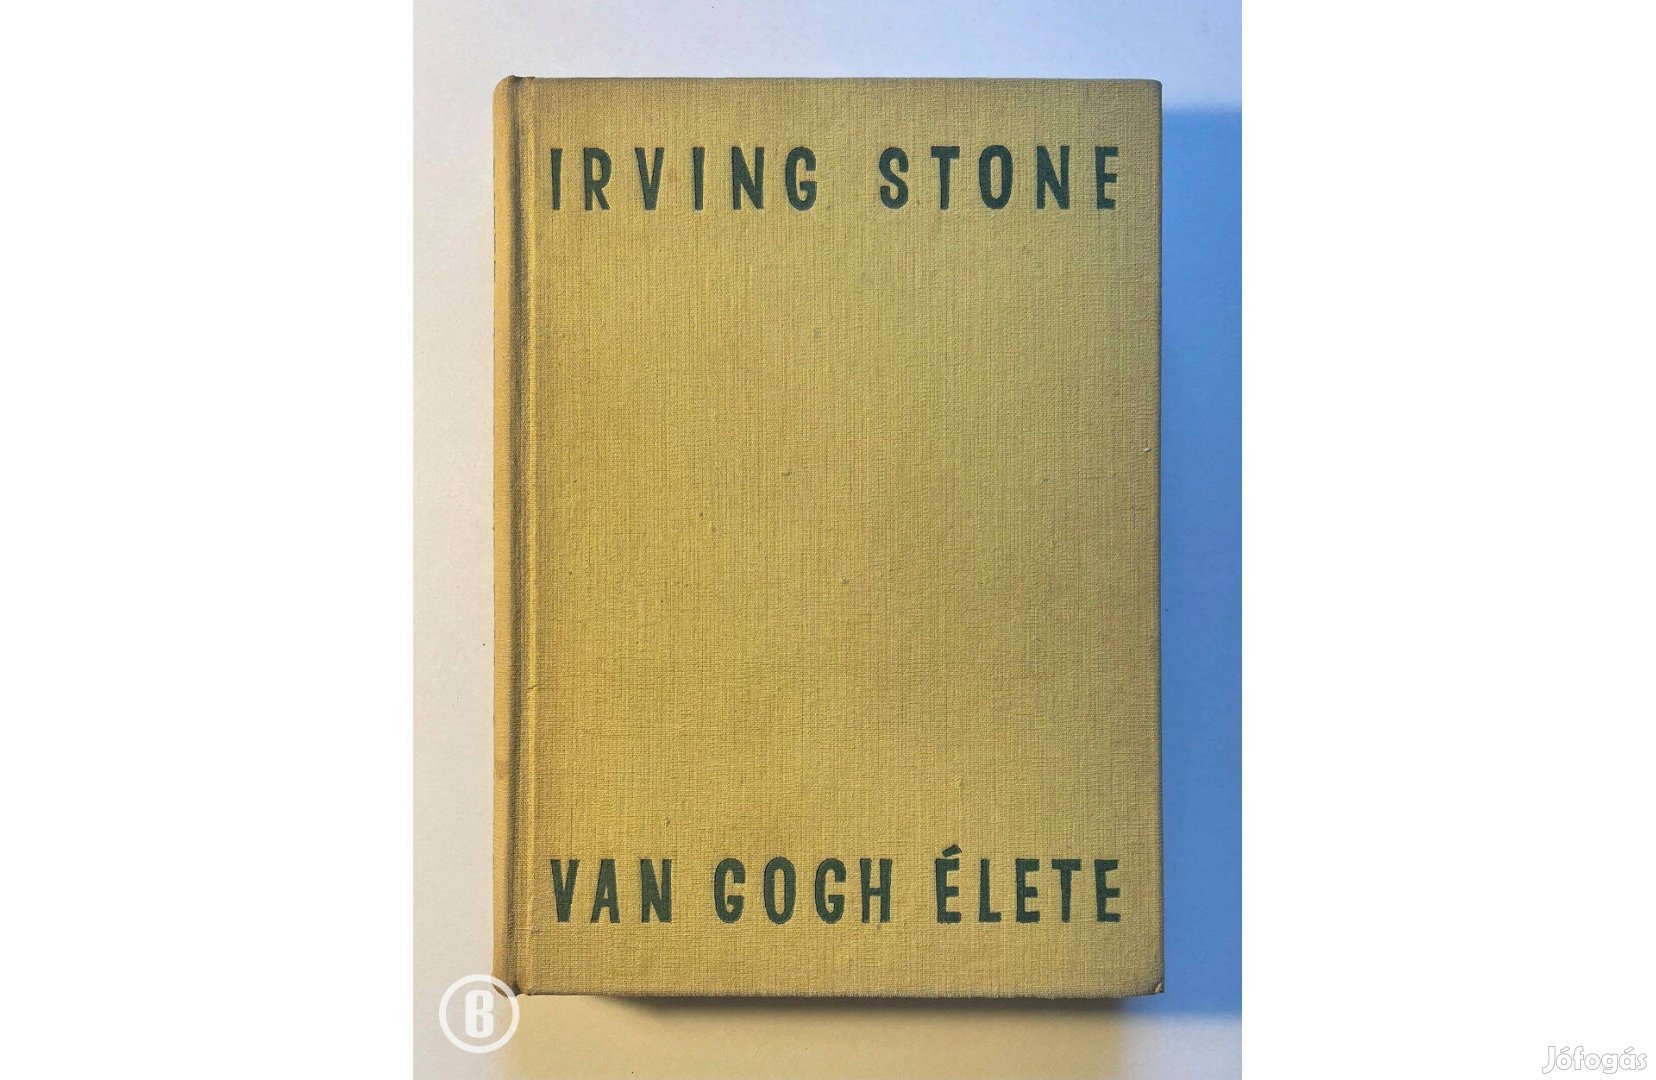 Irving Stone: Van Gogh élete